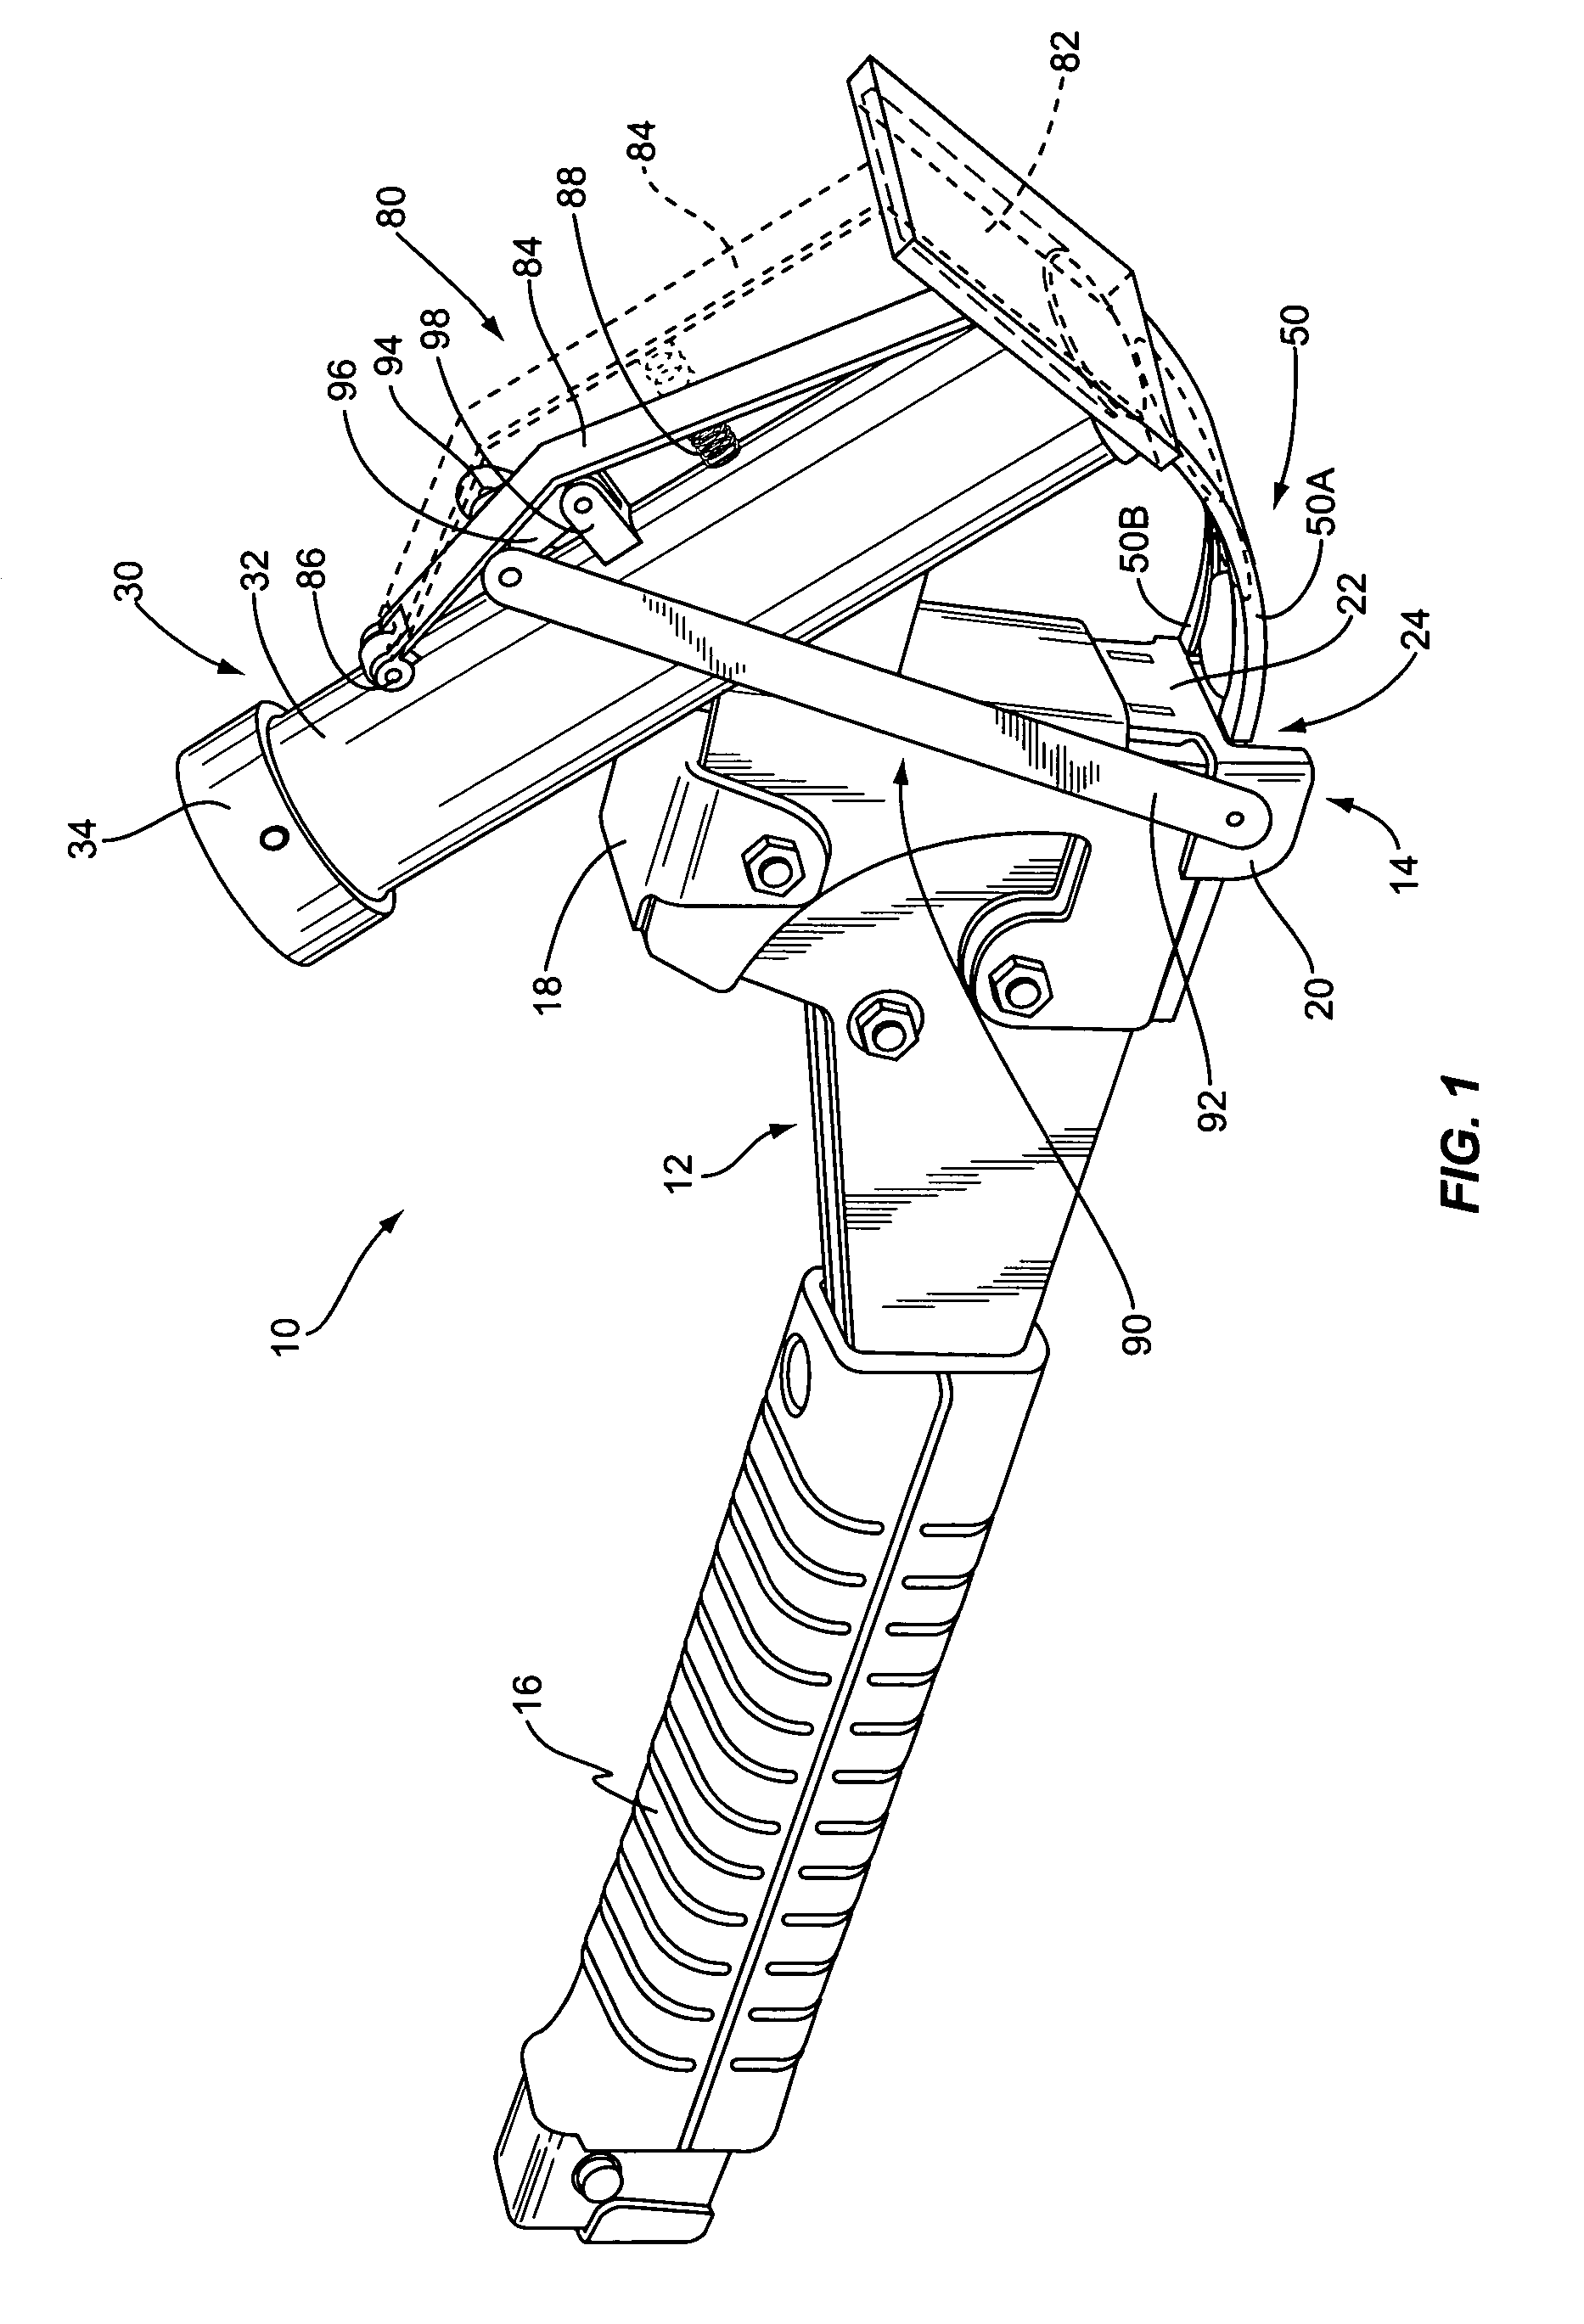 Combination staple gun and cap feeding device